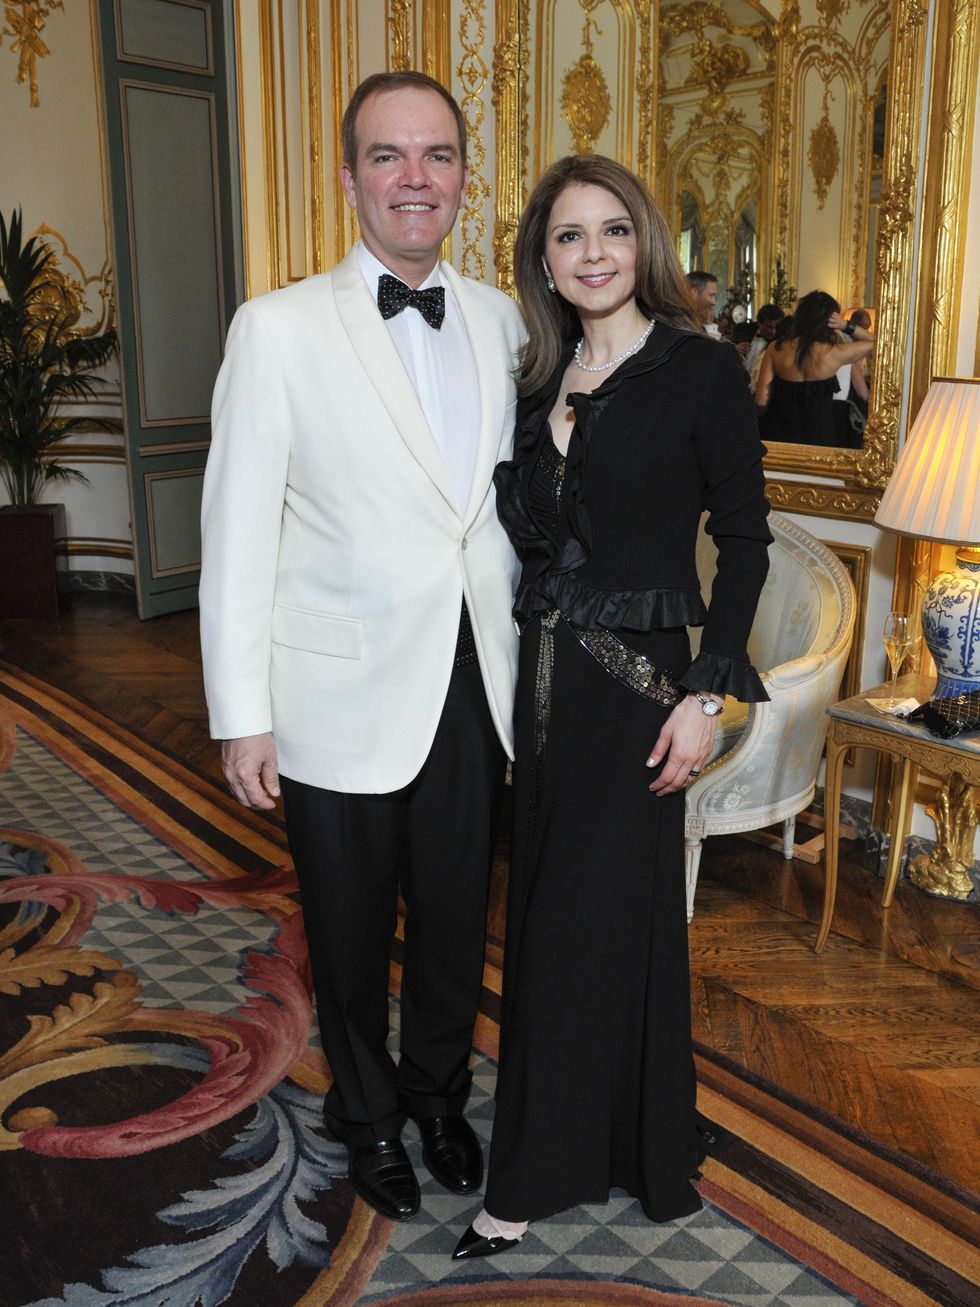 Alan Benz, Sallymoon Benz at US Ambassador to France dinner June 2013